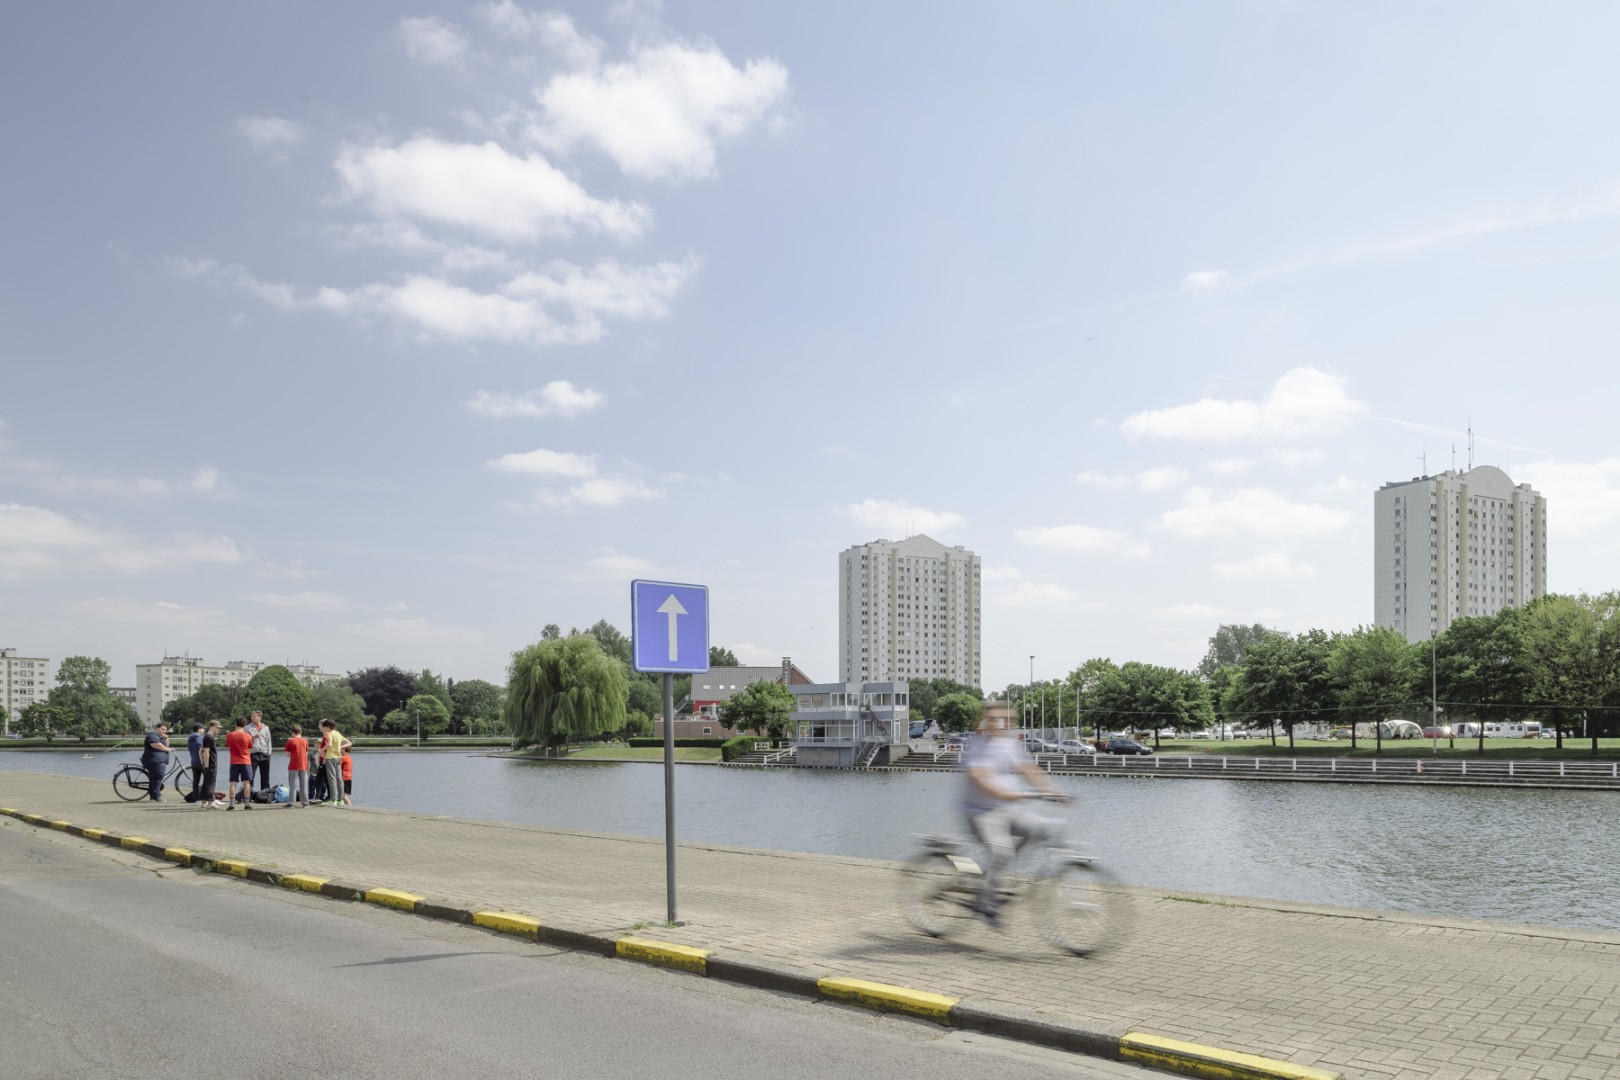 Team aangesteld voor toekomstvisie wijk Watersportbaan in Gent_foto_Olmo Peeters  stad Gent